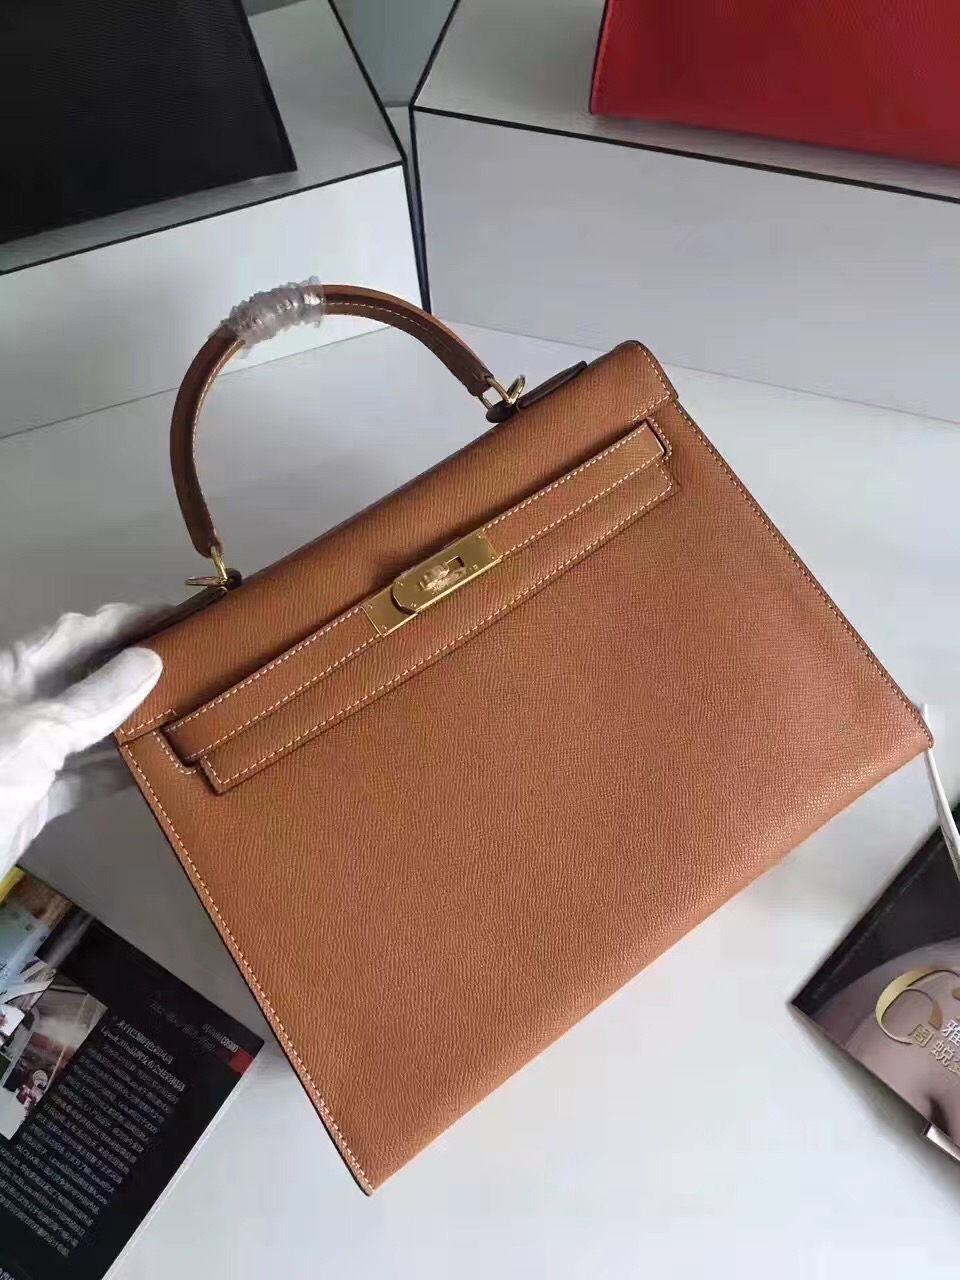 Hermes Epsom 32cm leather Kelly top tan handbags